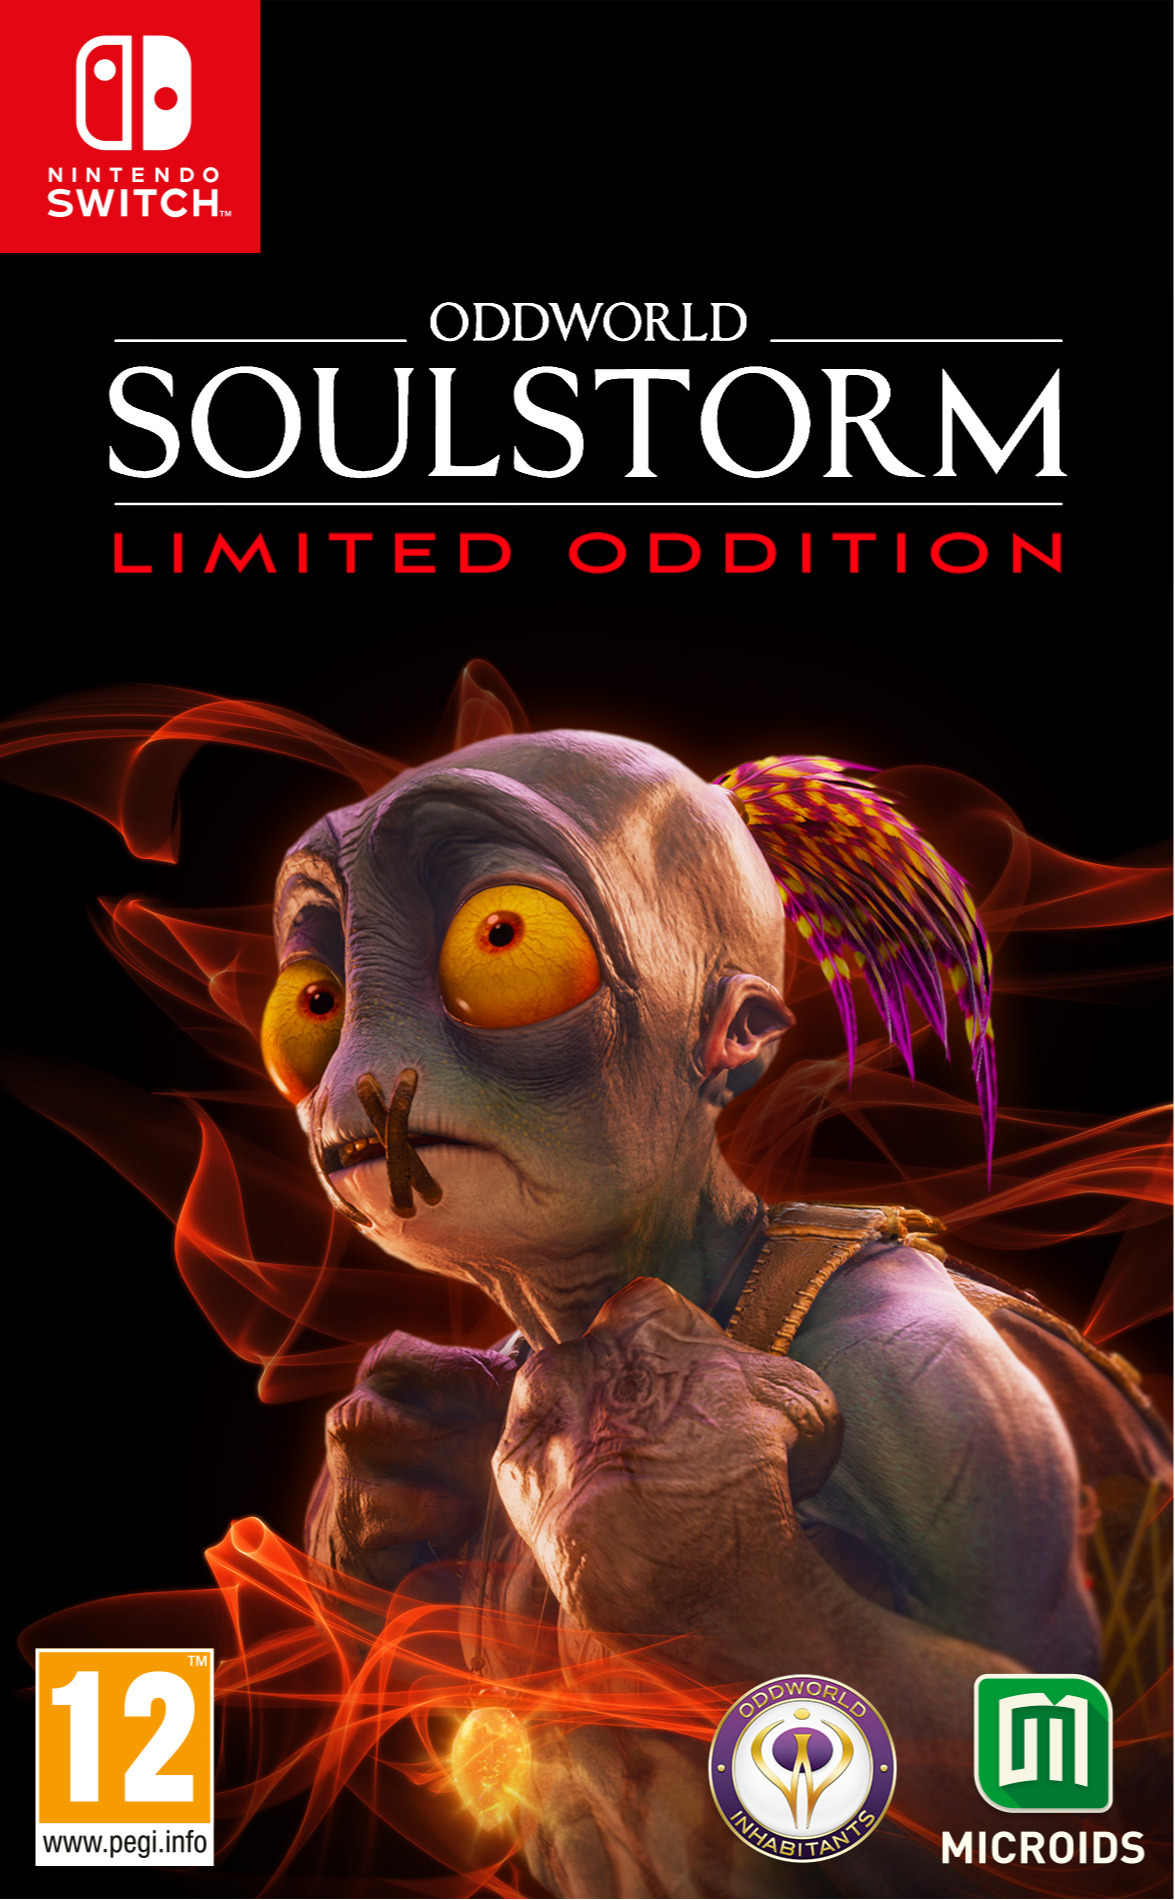 Oddworld: Soulstorm - Limited Oddition (SWITCH)